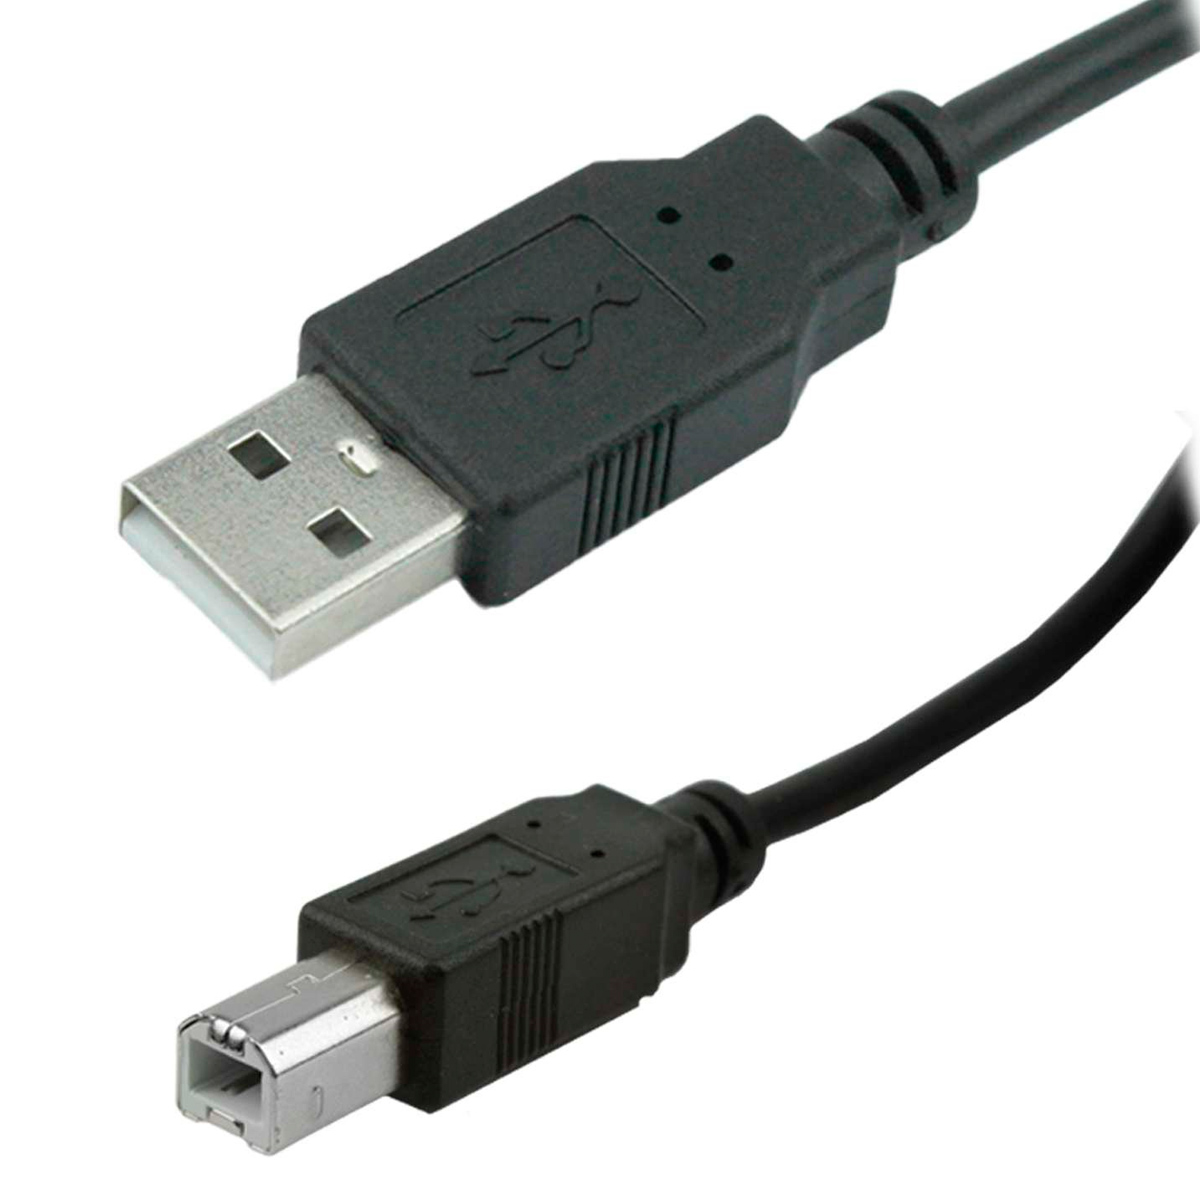 Cabo USB para Impressora - AM/BM - Versão 2.0 High Speed - 1,80 metros - Fortrek SBI101